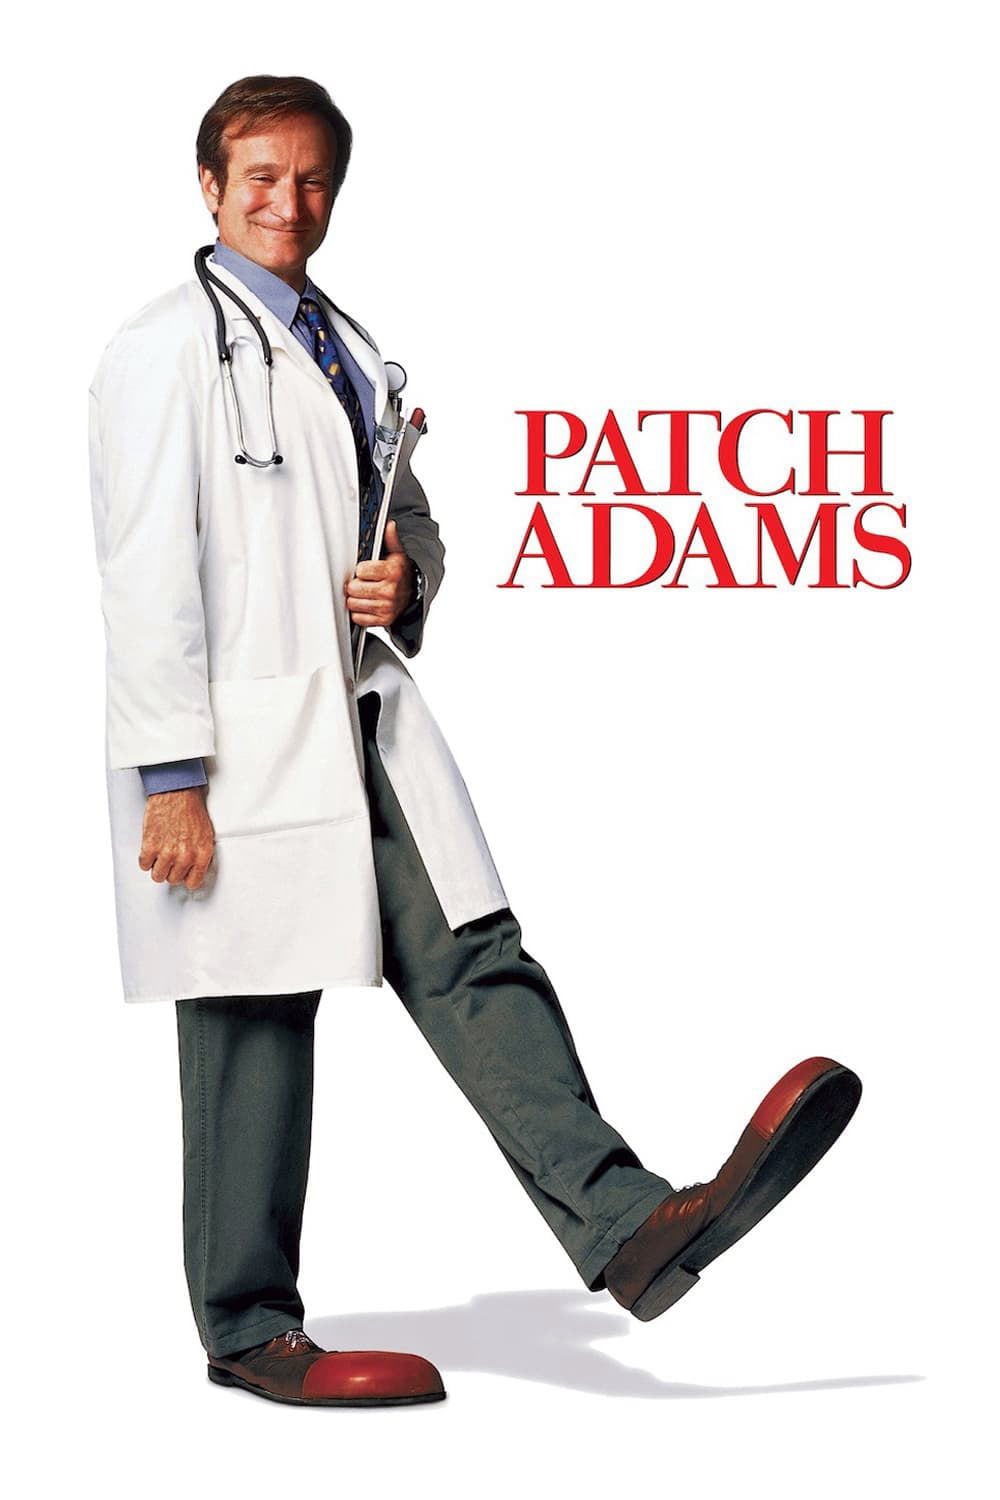 Poster Phim Bác Sĩ Patch Adams (Patch Adams)